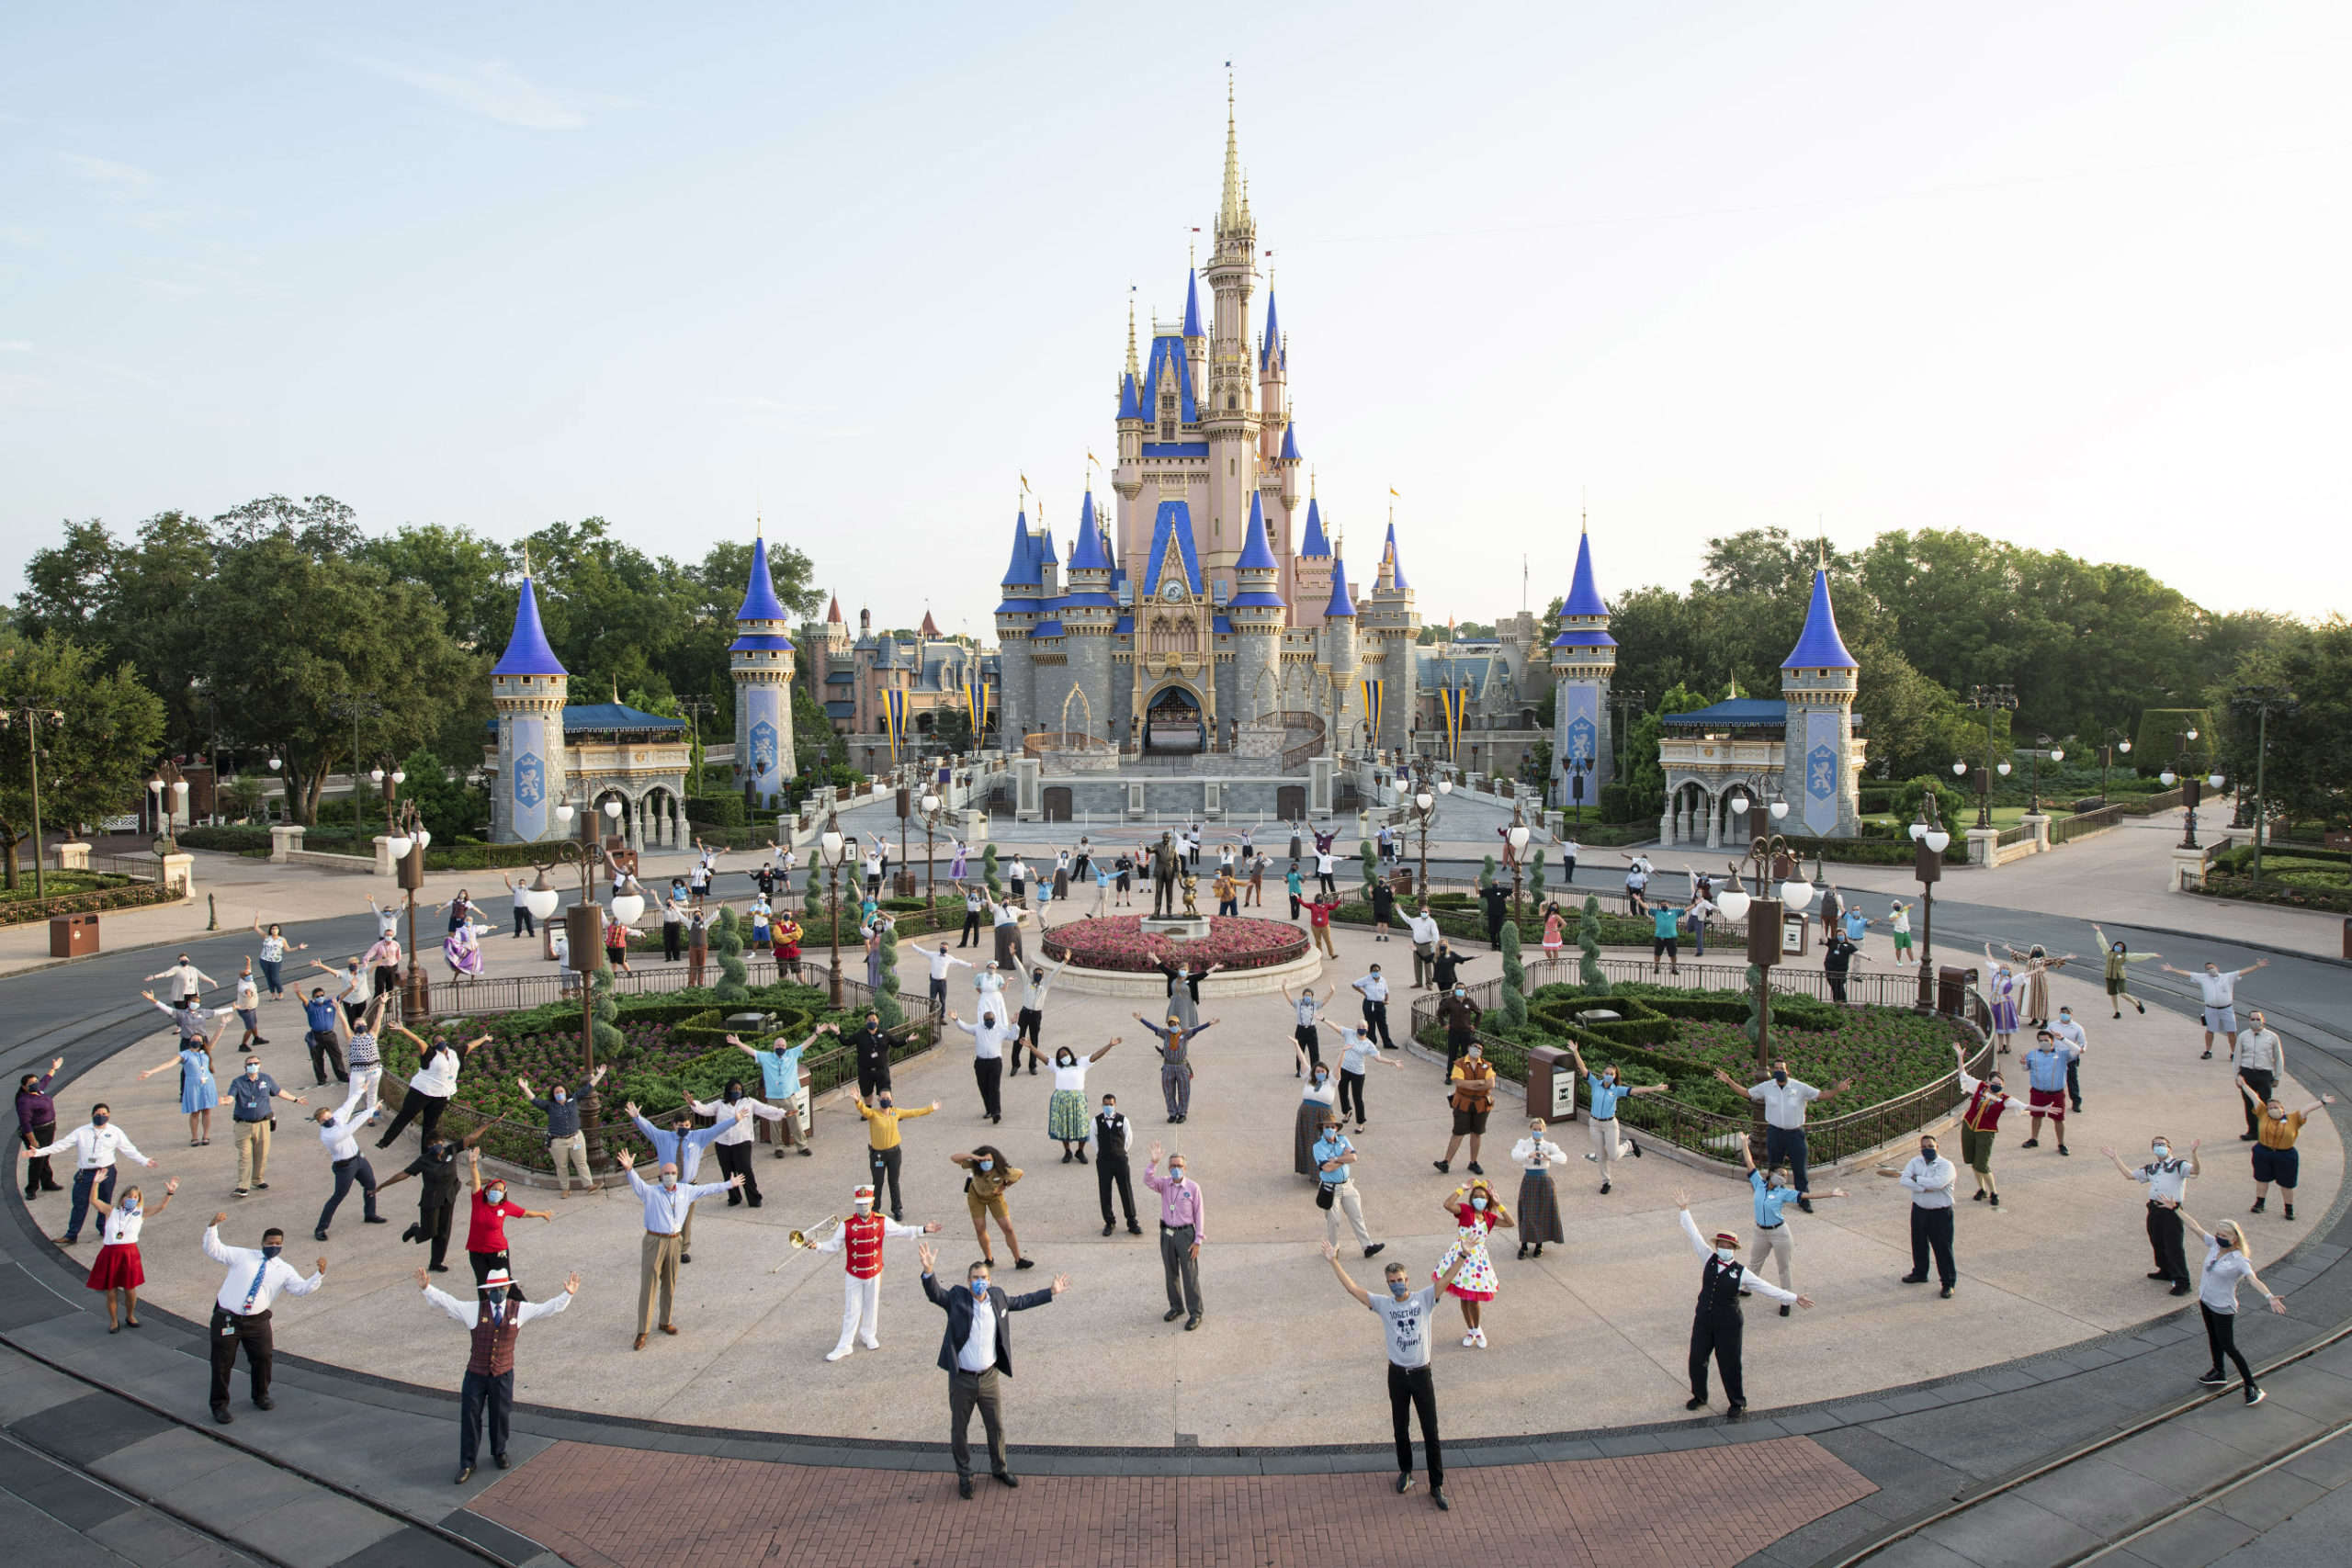 Walt Disney World via Getty Images